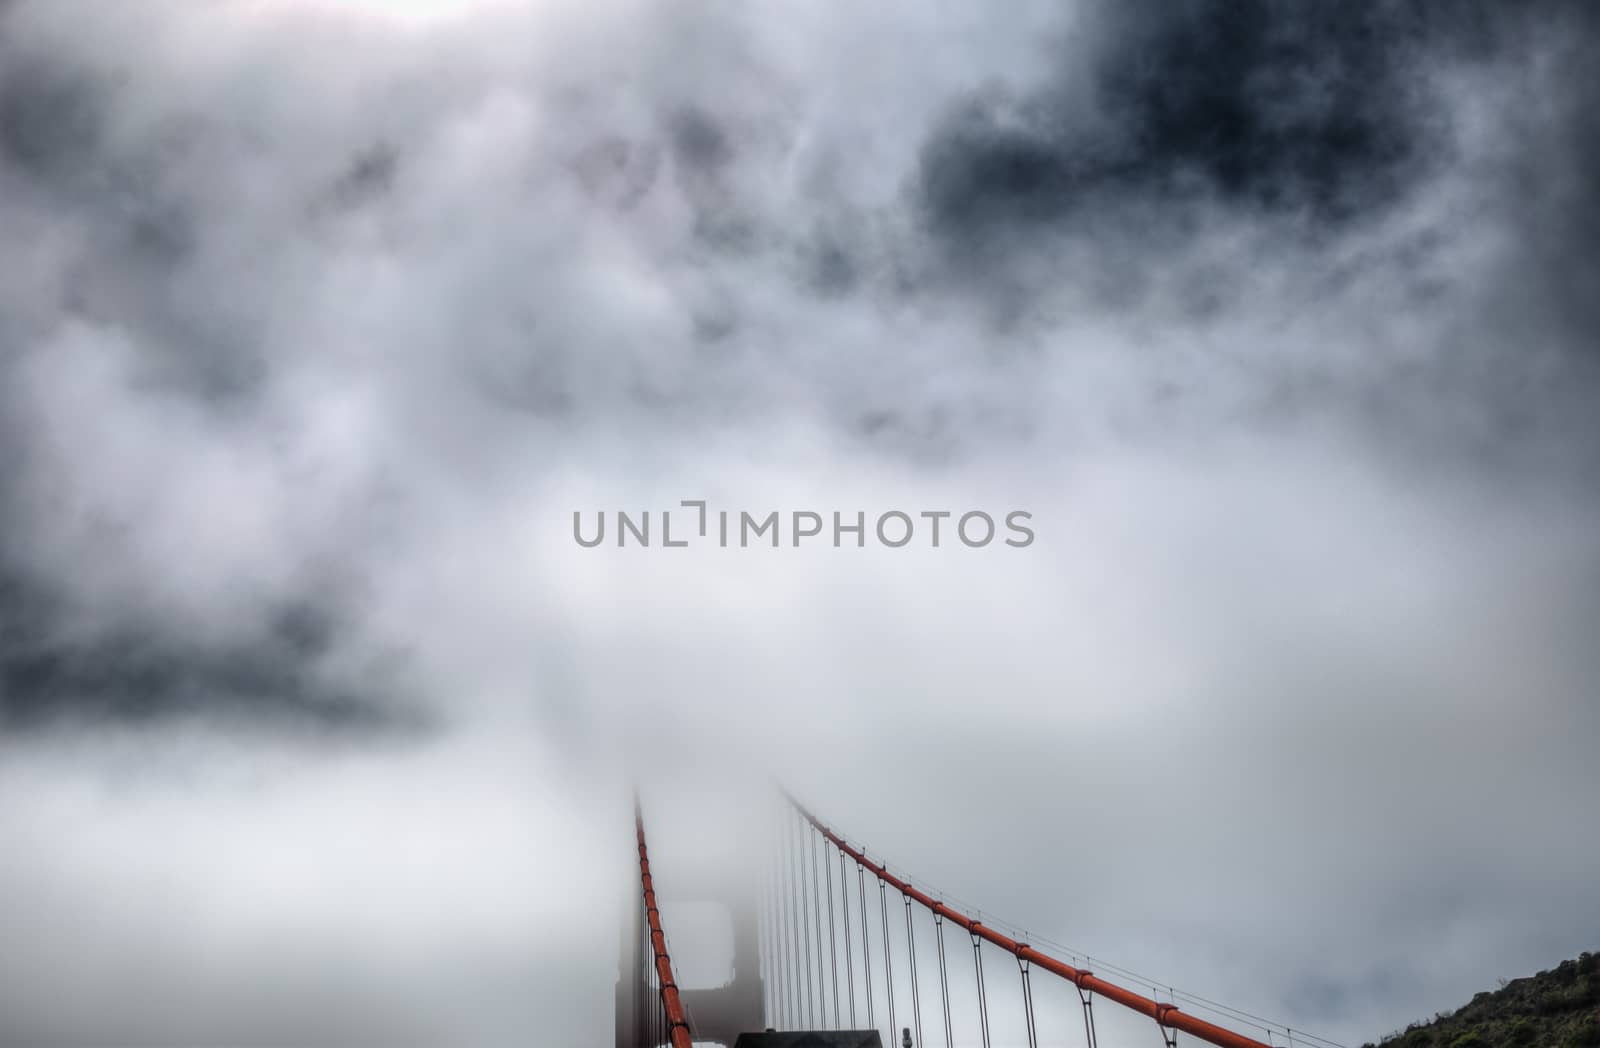 Golden Gate Bridge in San Francisco, California, USA totaly in Fog